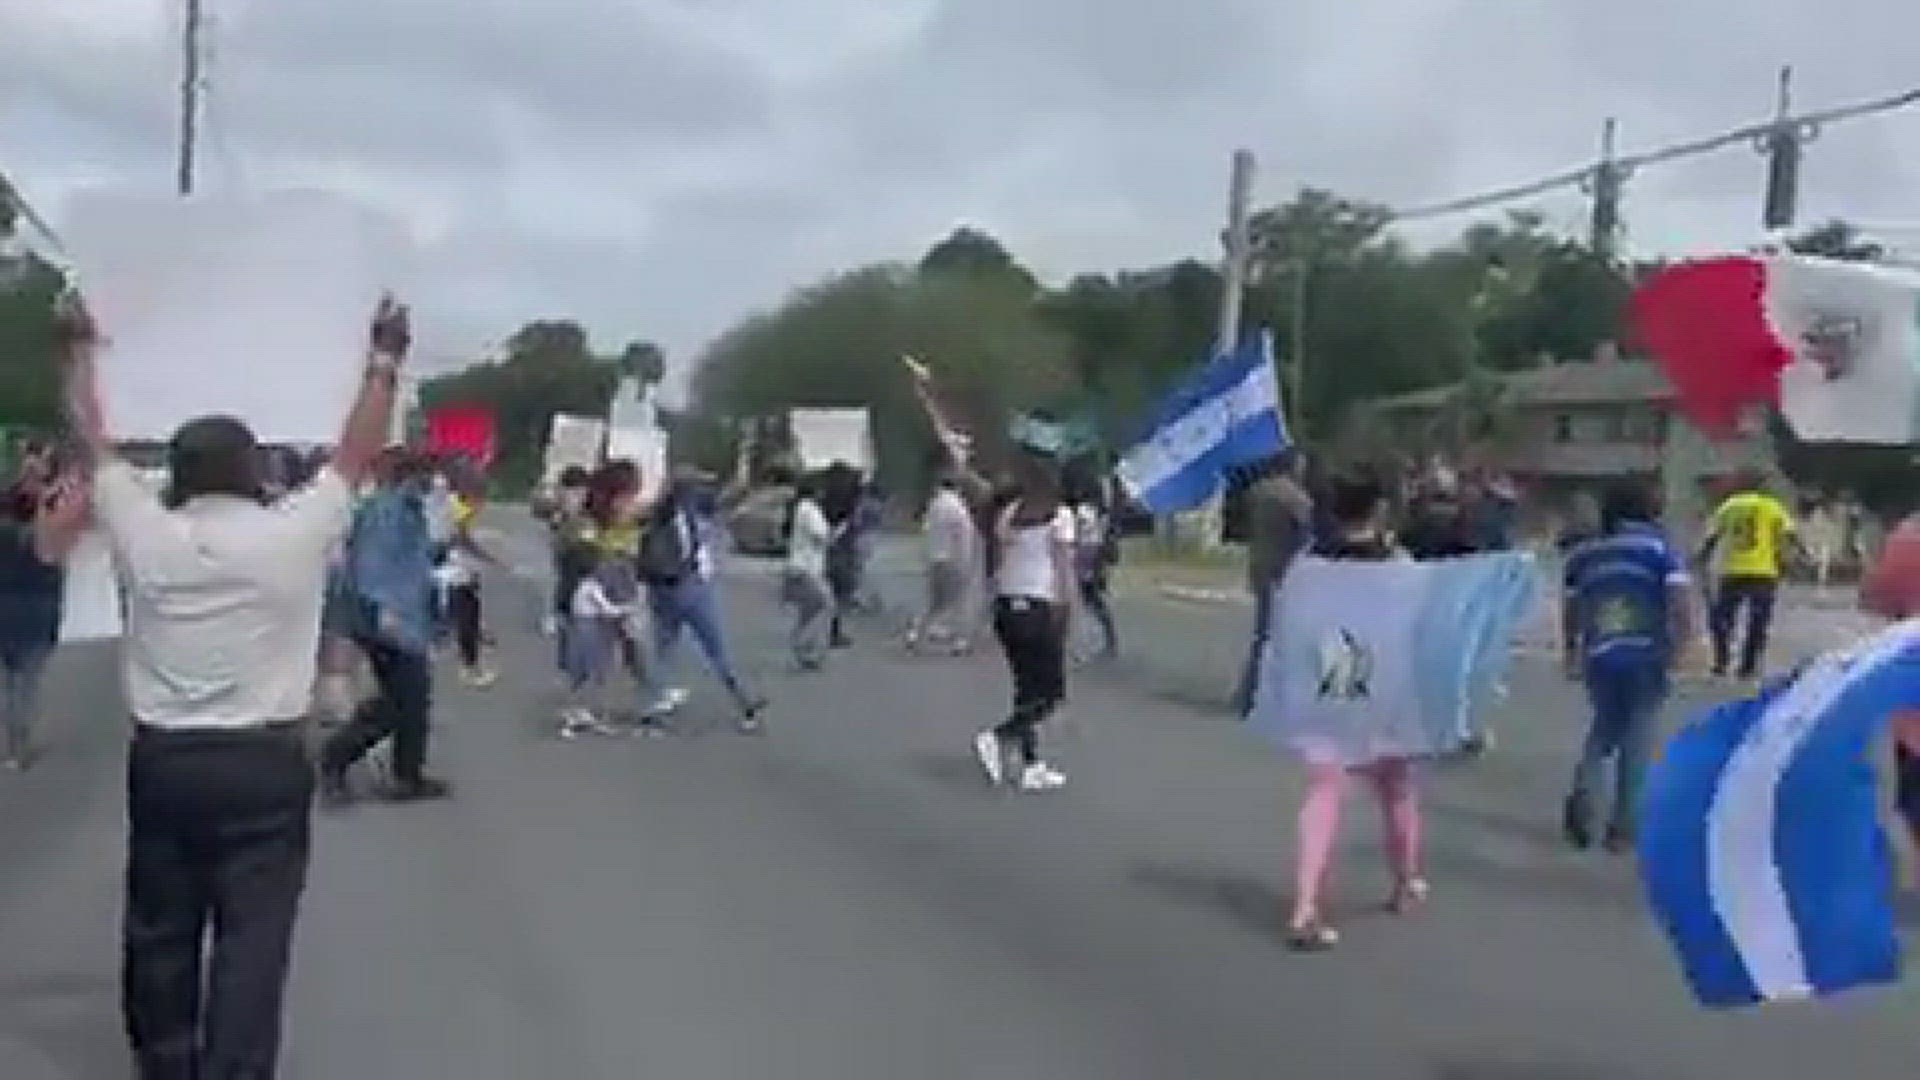 Protesters outside Havana Jax saying Desantis immigration law will hurt Florida
Credit: Jeannie